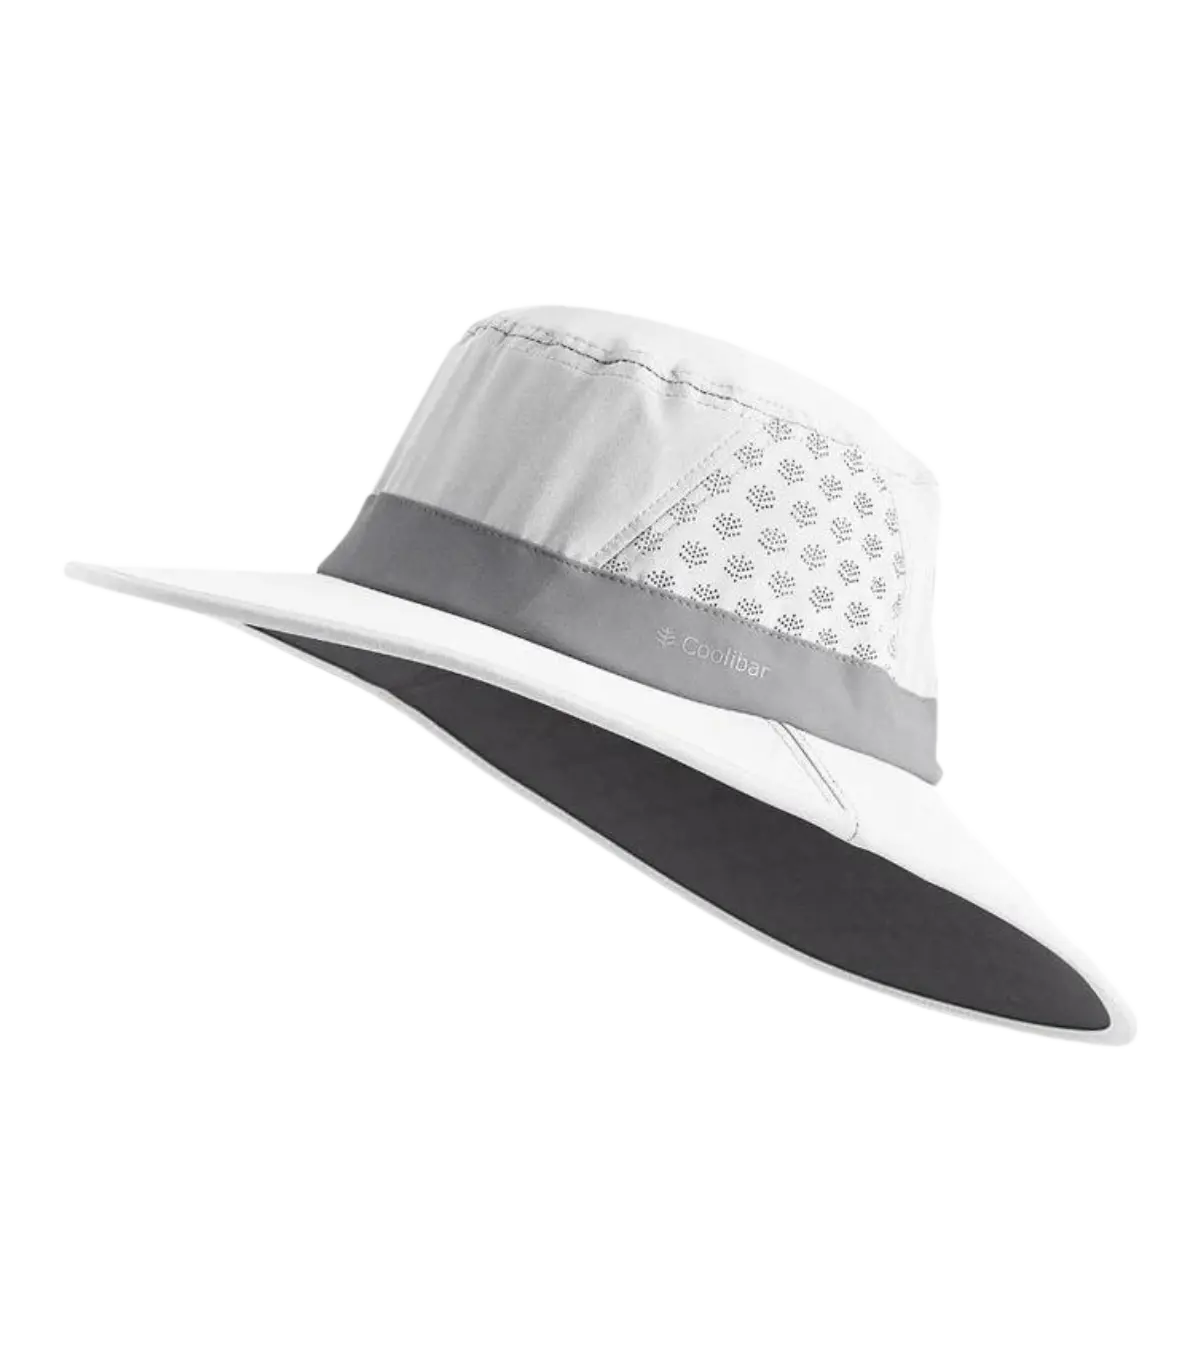 coolibar Fore Golf Hat (UPF 50+)